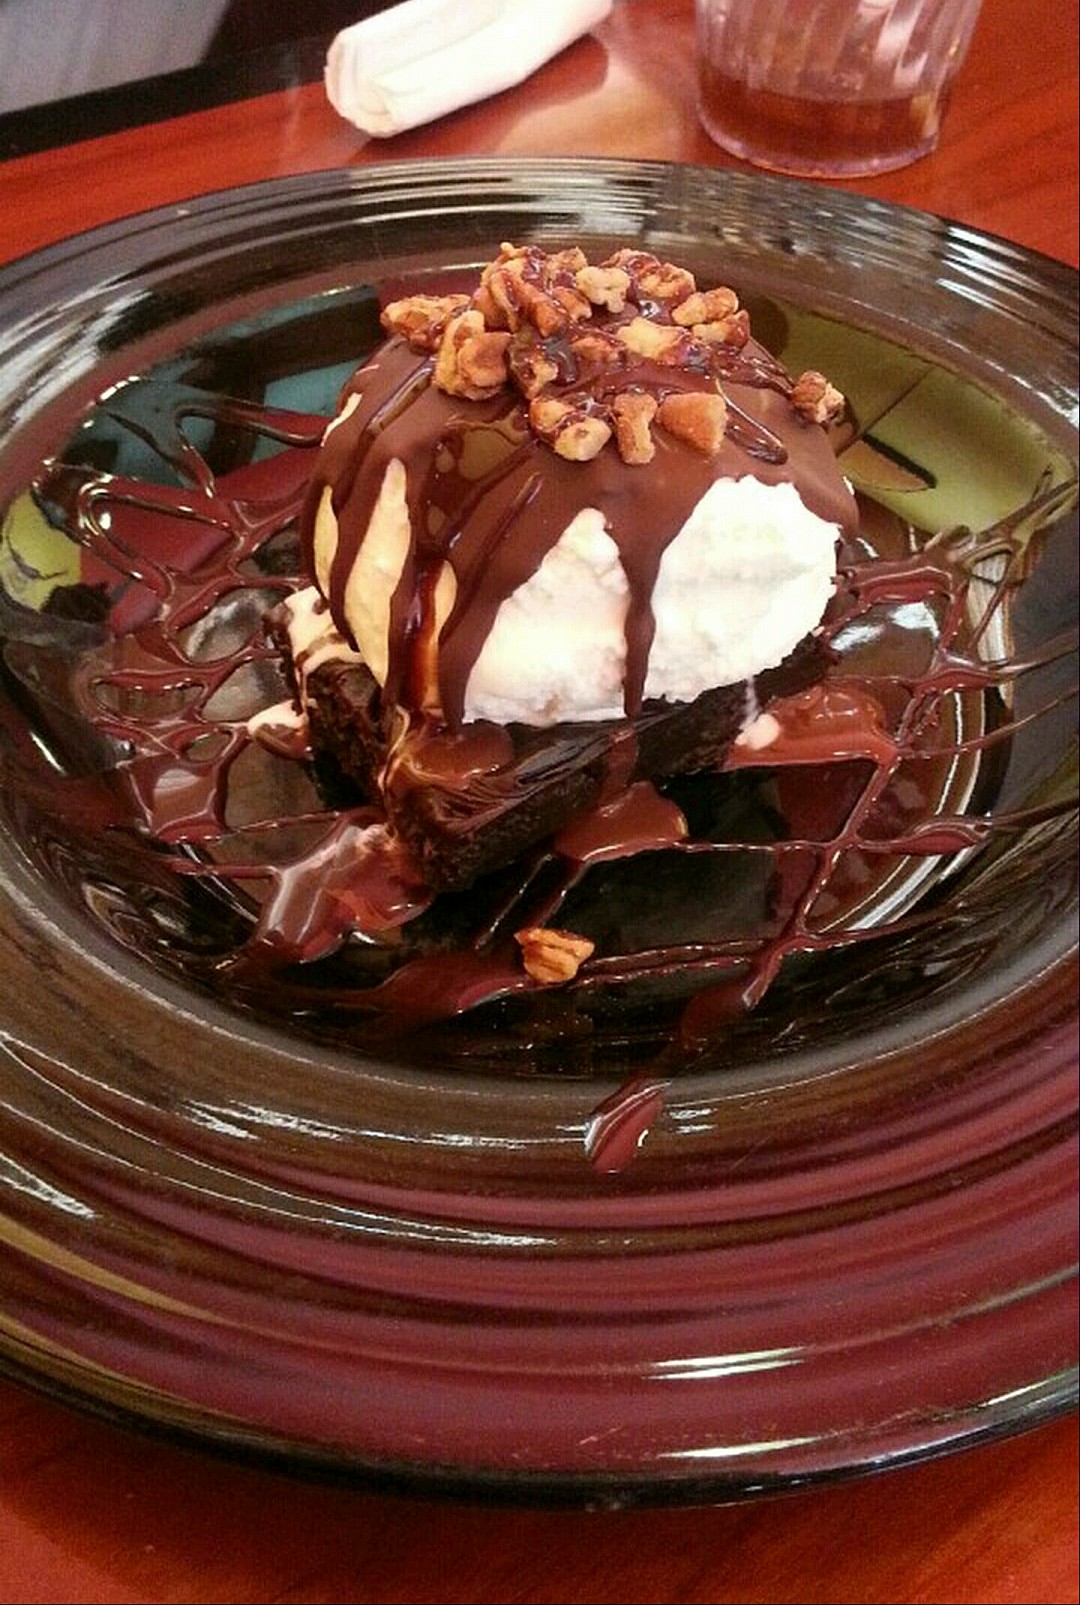 Chocolate brownie with ice cream @ فدركرز - البحرين